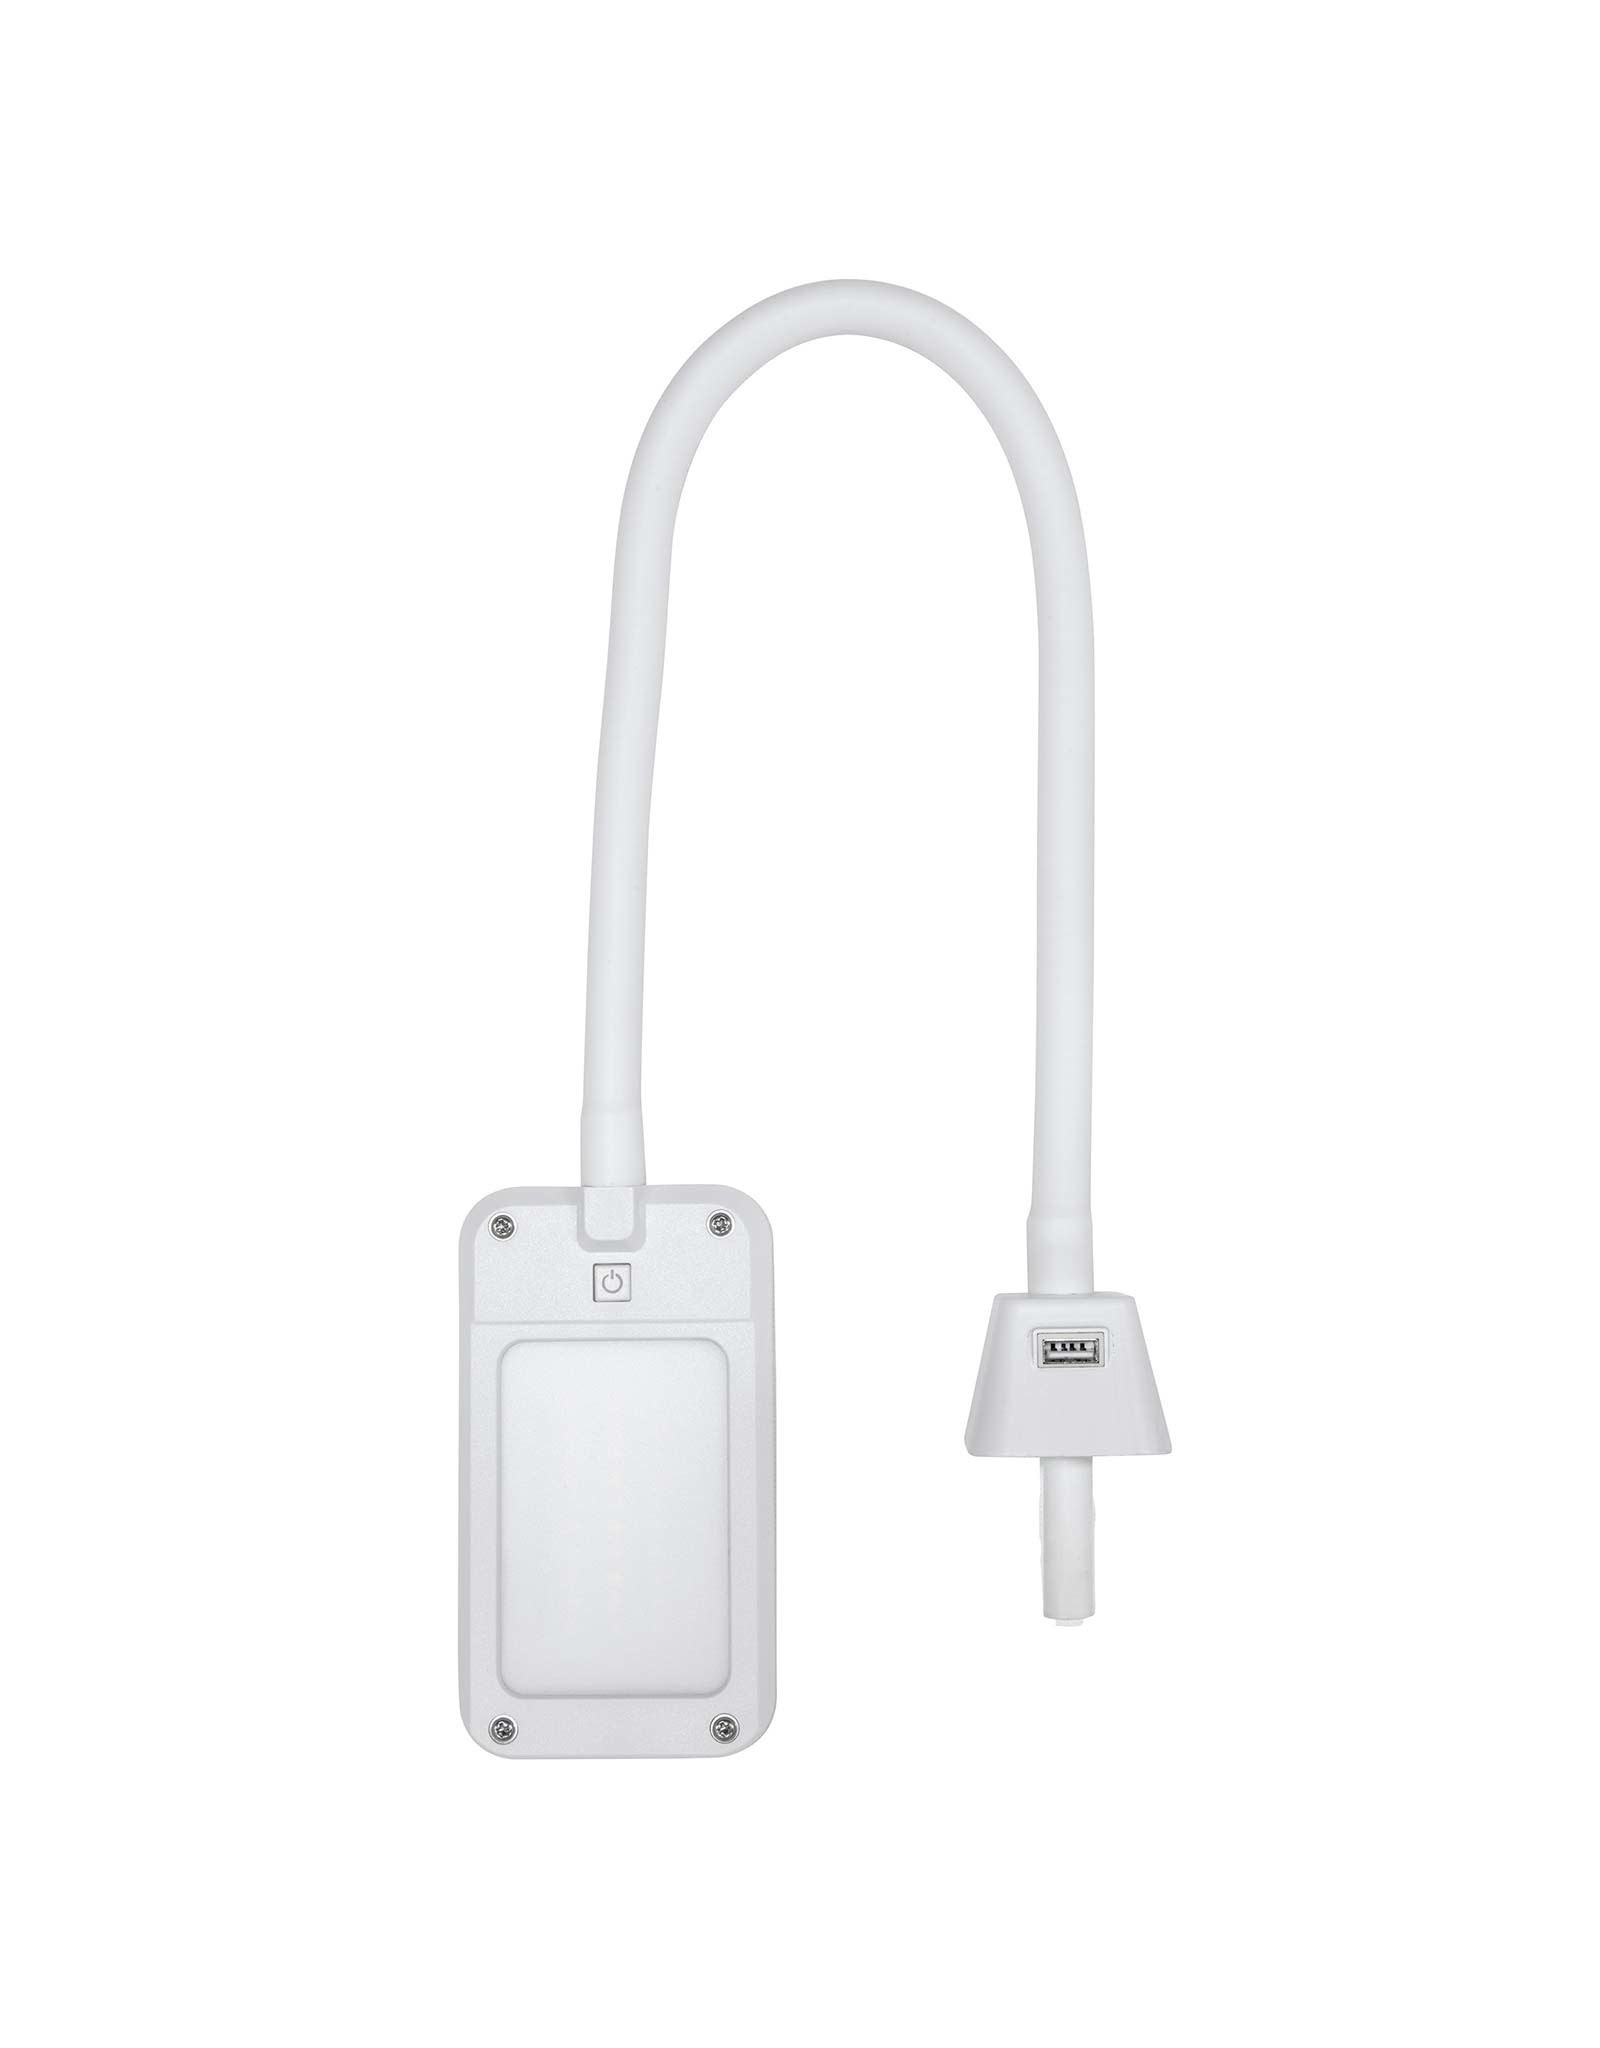 Studio Designs LED Flex Lamp with USB Charging Base, White